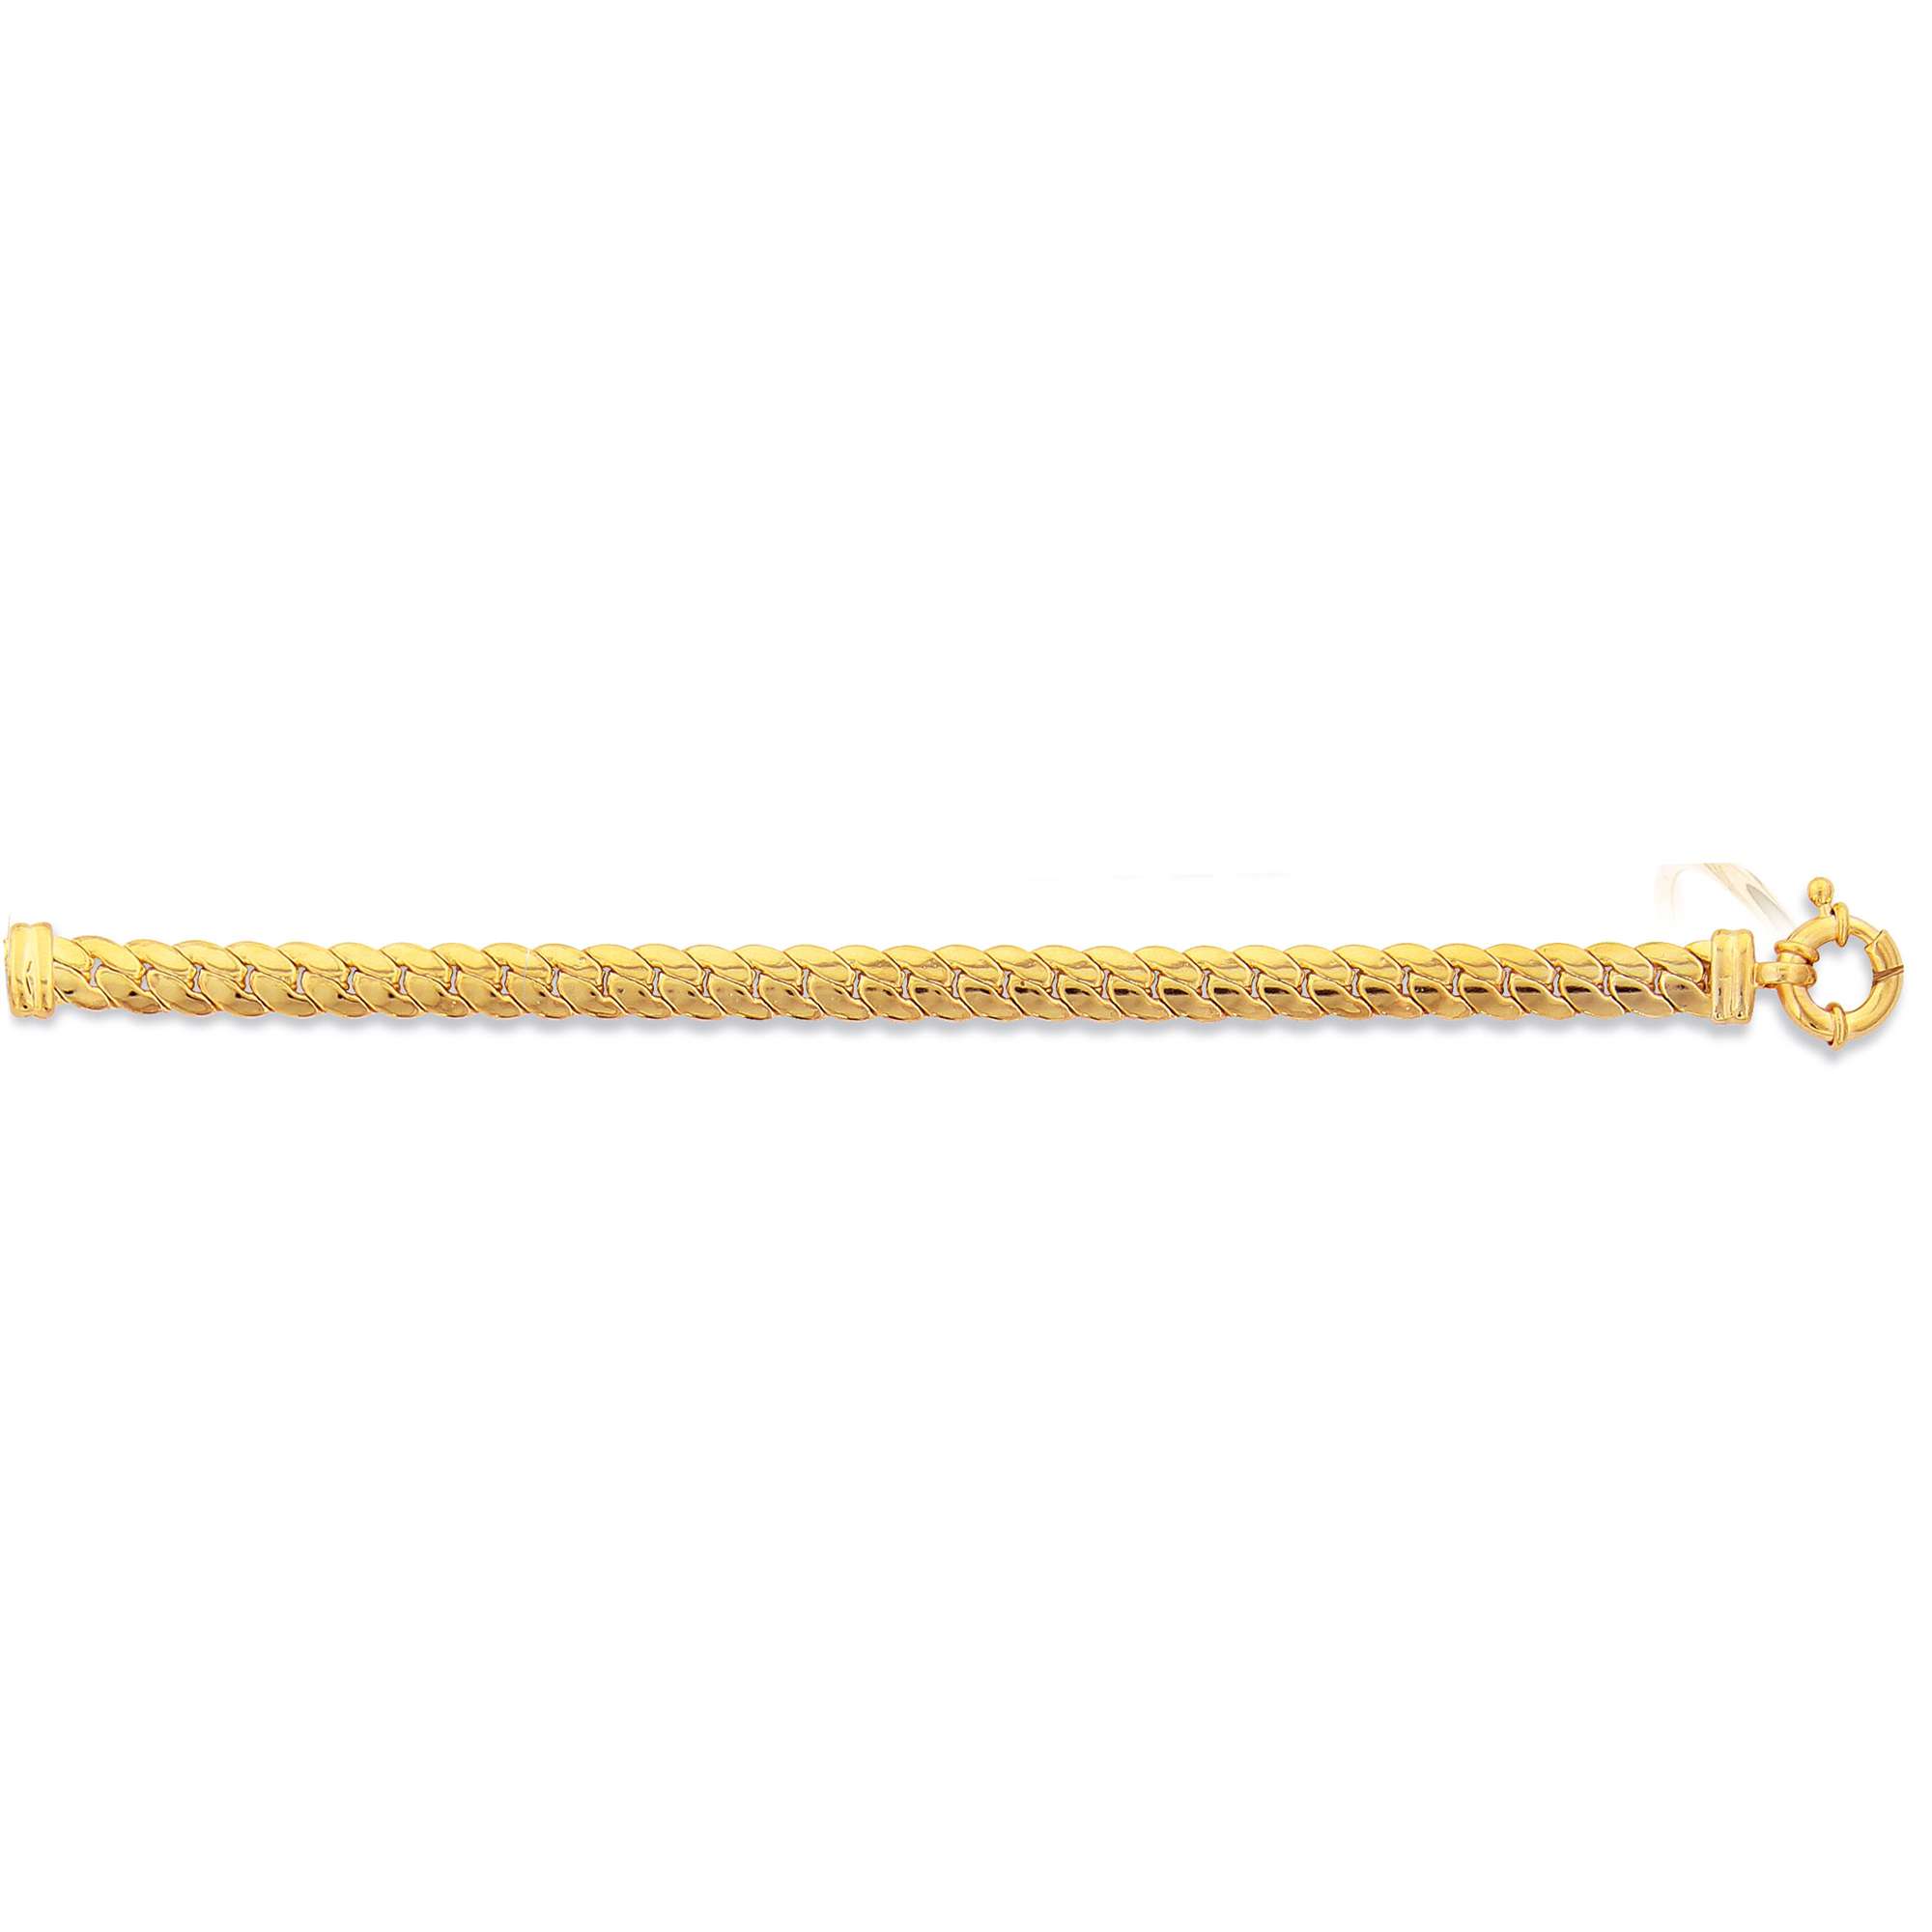 Bracelet plaqué or maille anglaise (19 cm) - (401951-19)